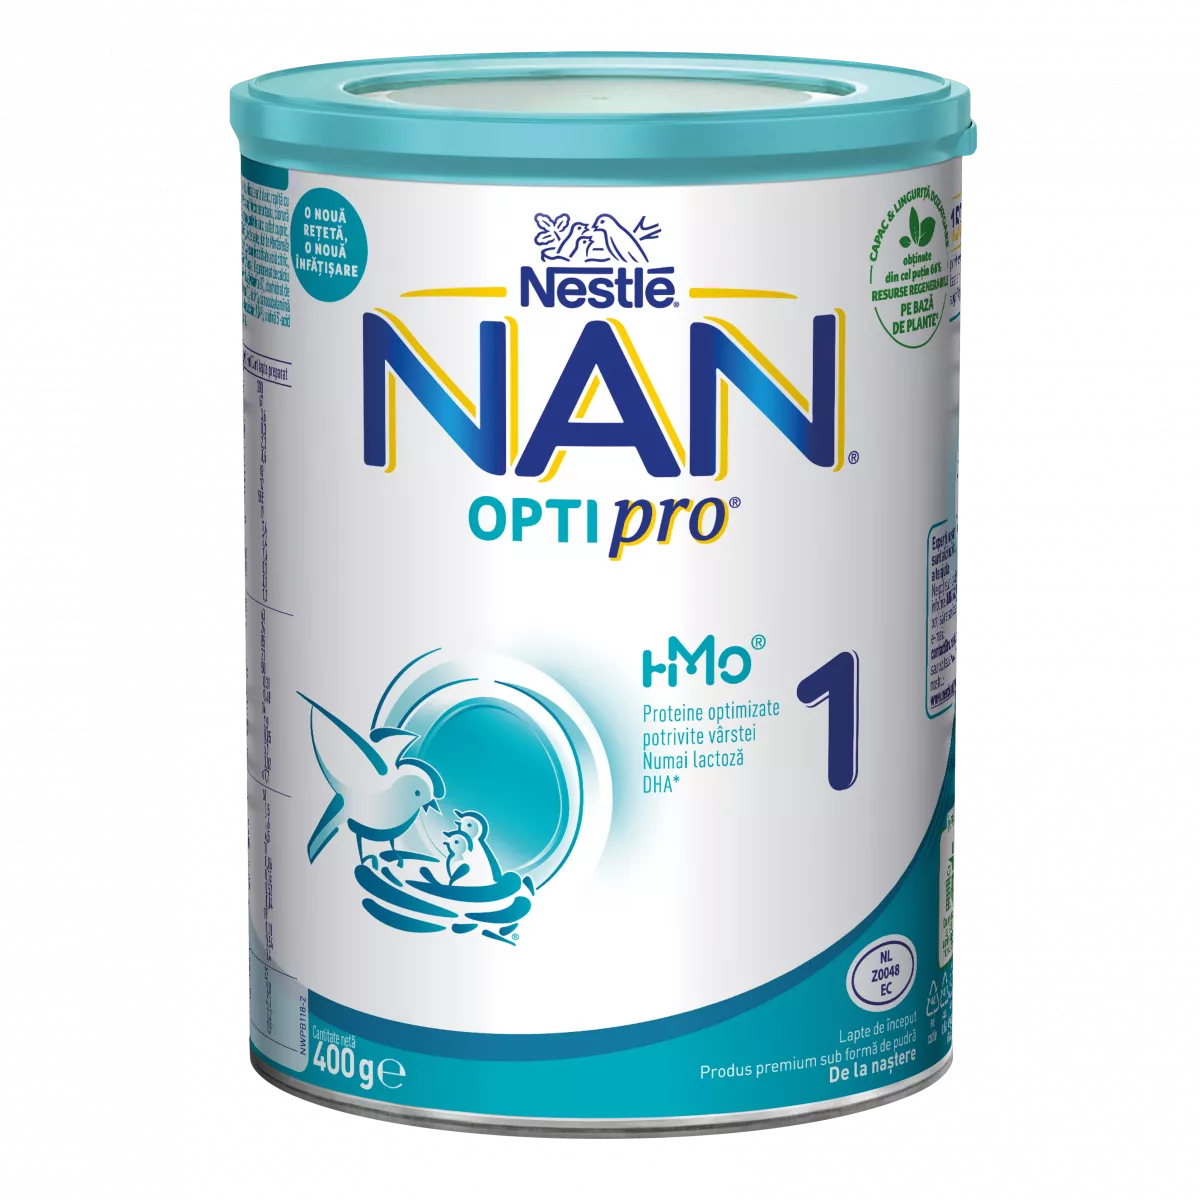 Nestle Nan 1 Optipro hmo 400g, de la nastere